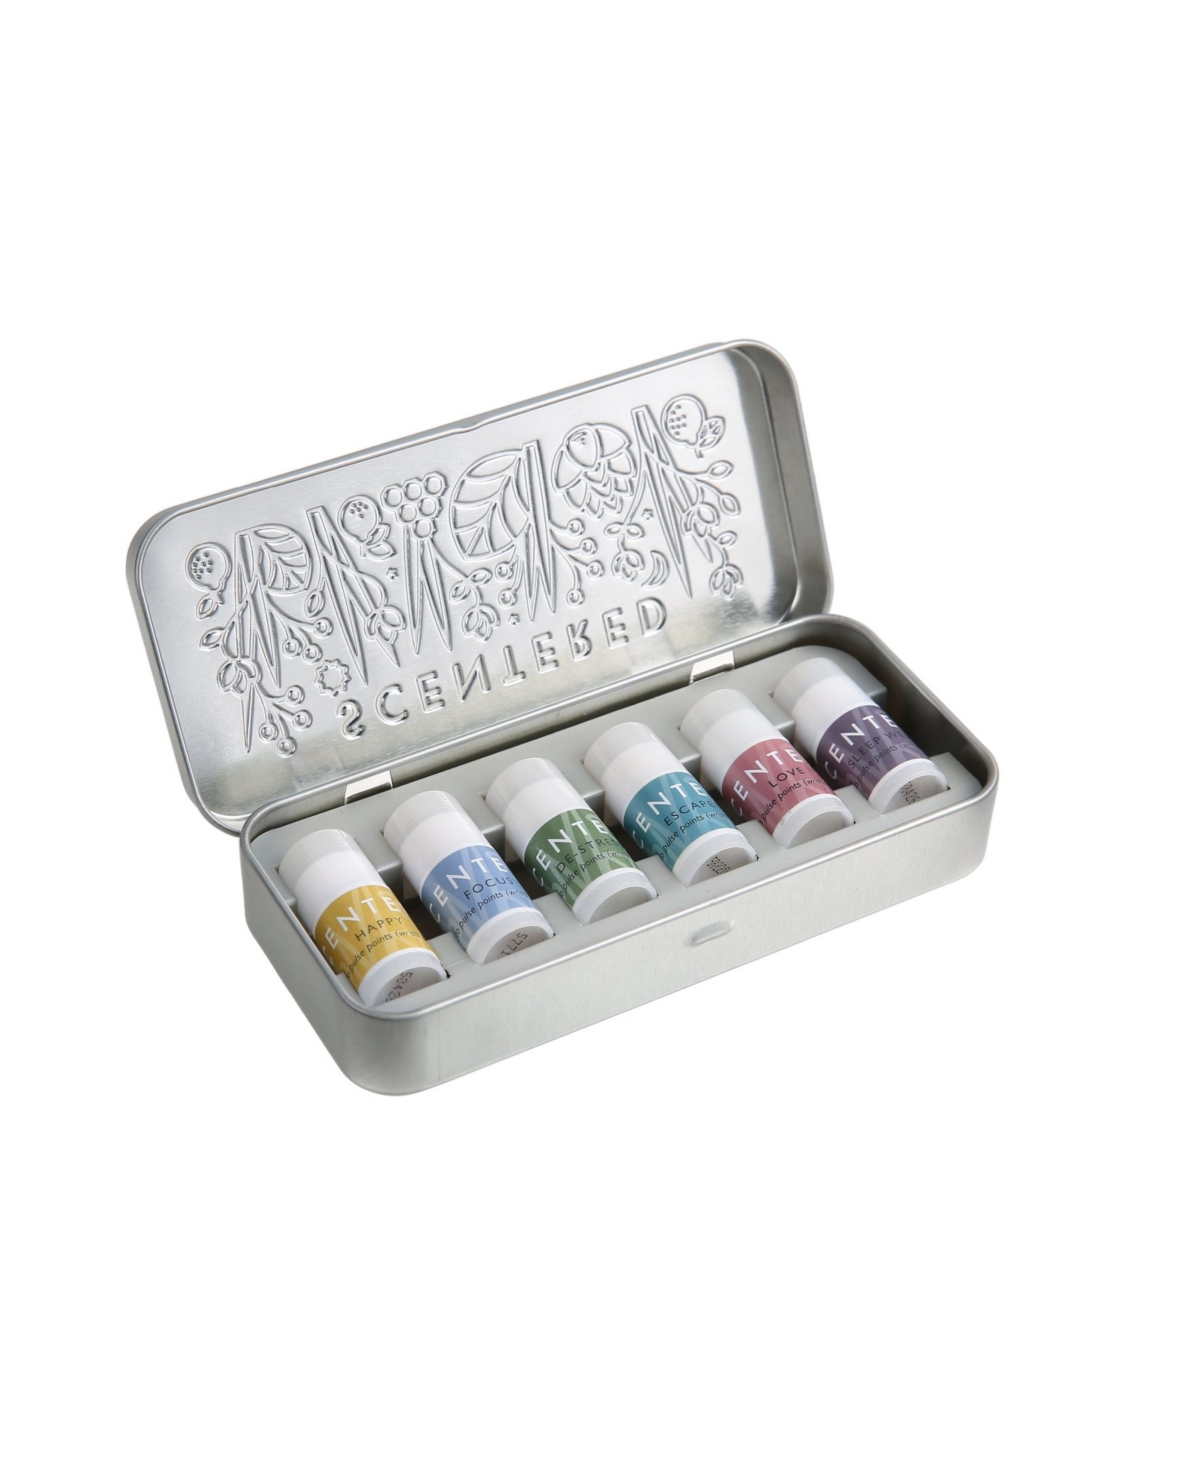 Wellbeing Ritual Aromatherapy Mini Tin Whole Collection Balm, Set of 6, 1.5 gram each